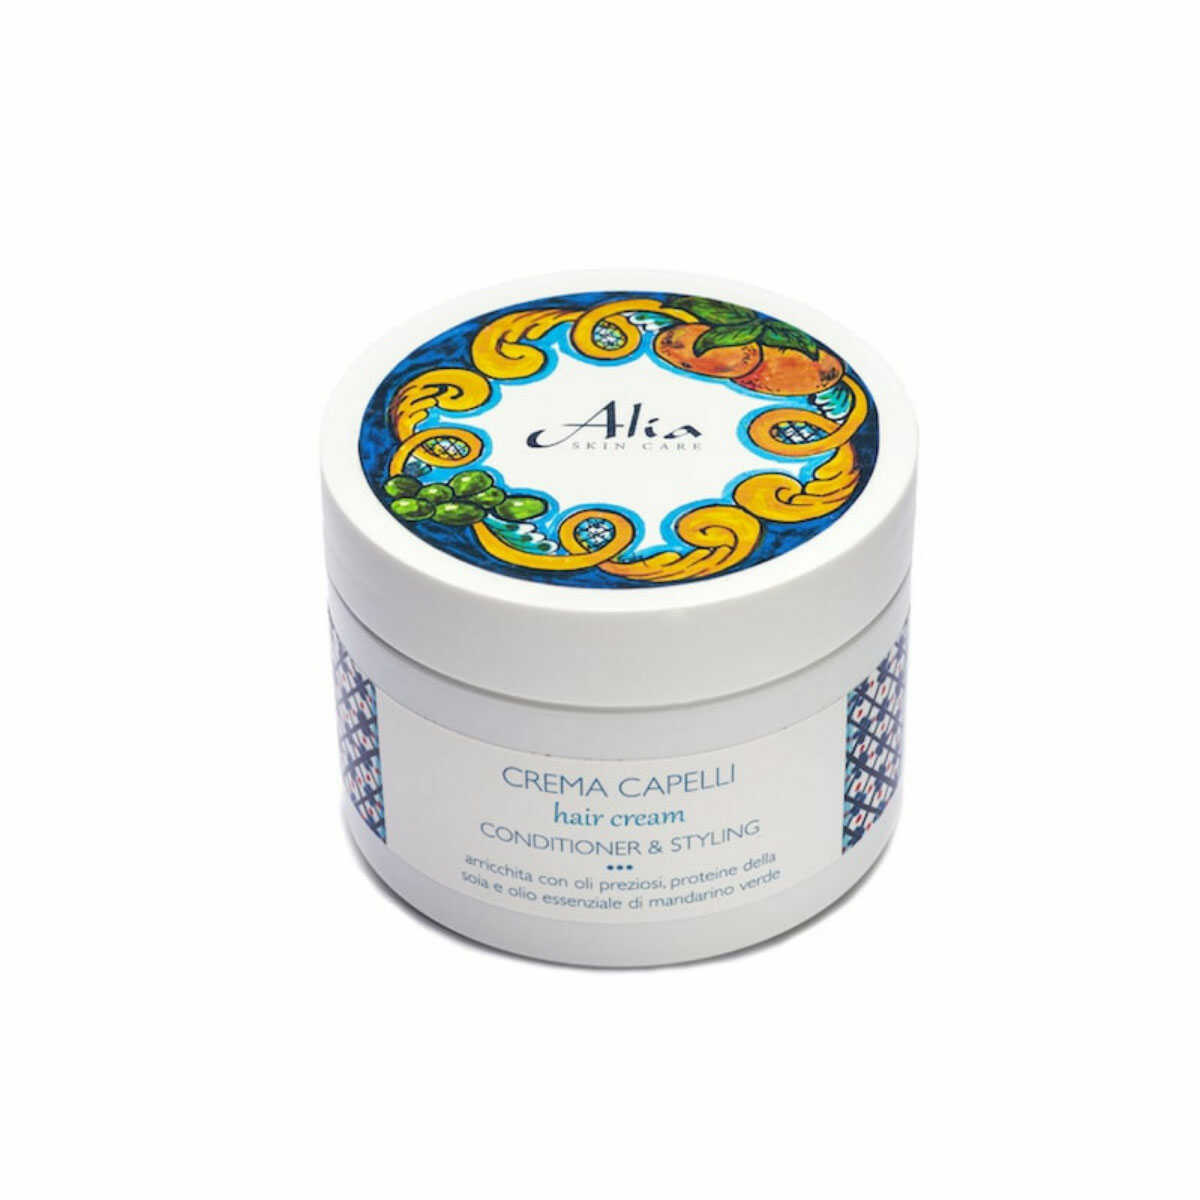 Alia Skin Care - Conditioner en Styling Hair Cream met Aloë Vera / Mandarijn 200ml